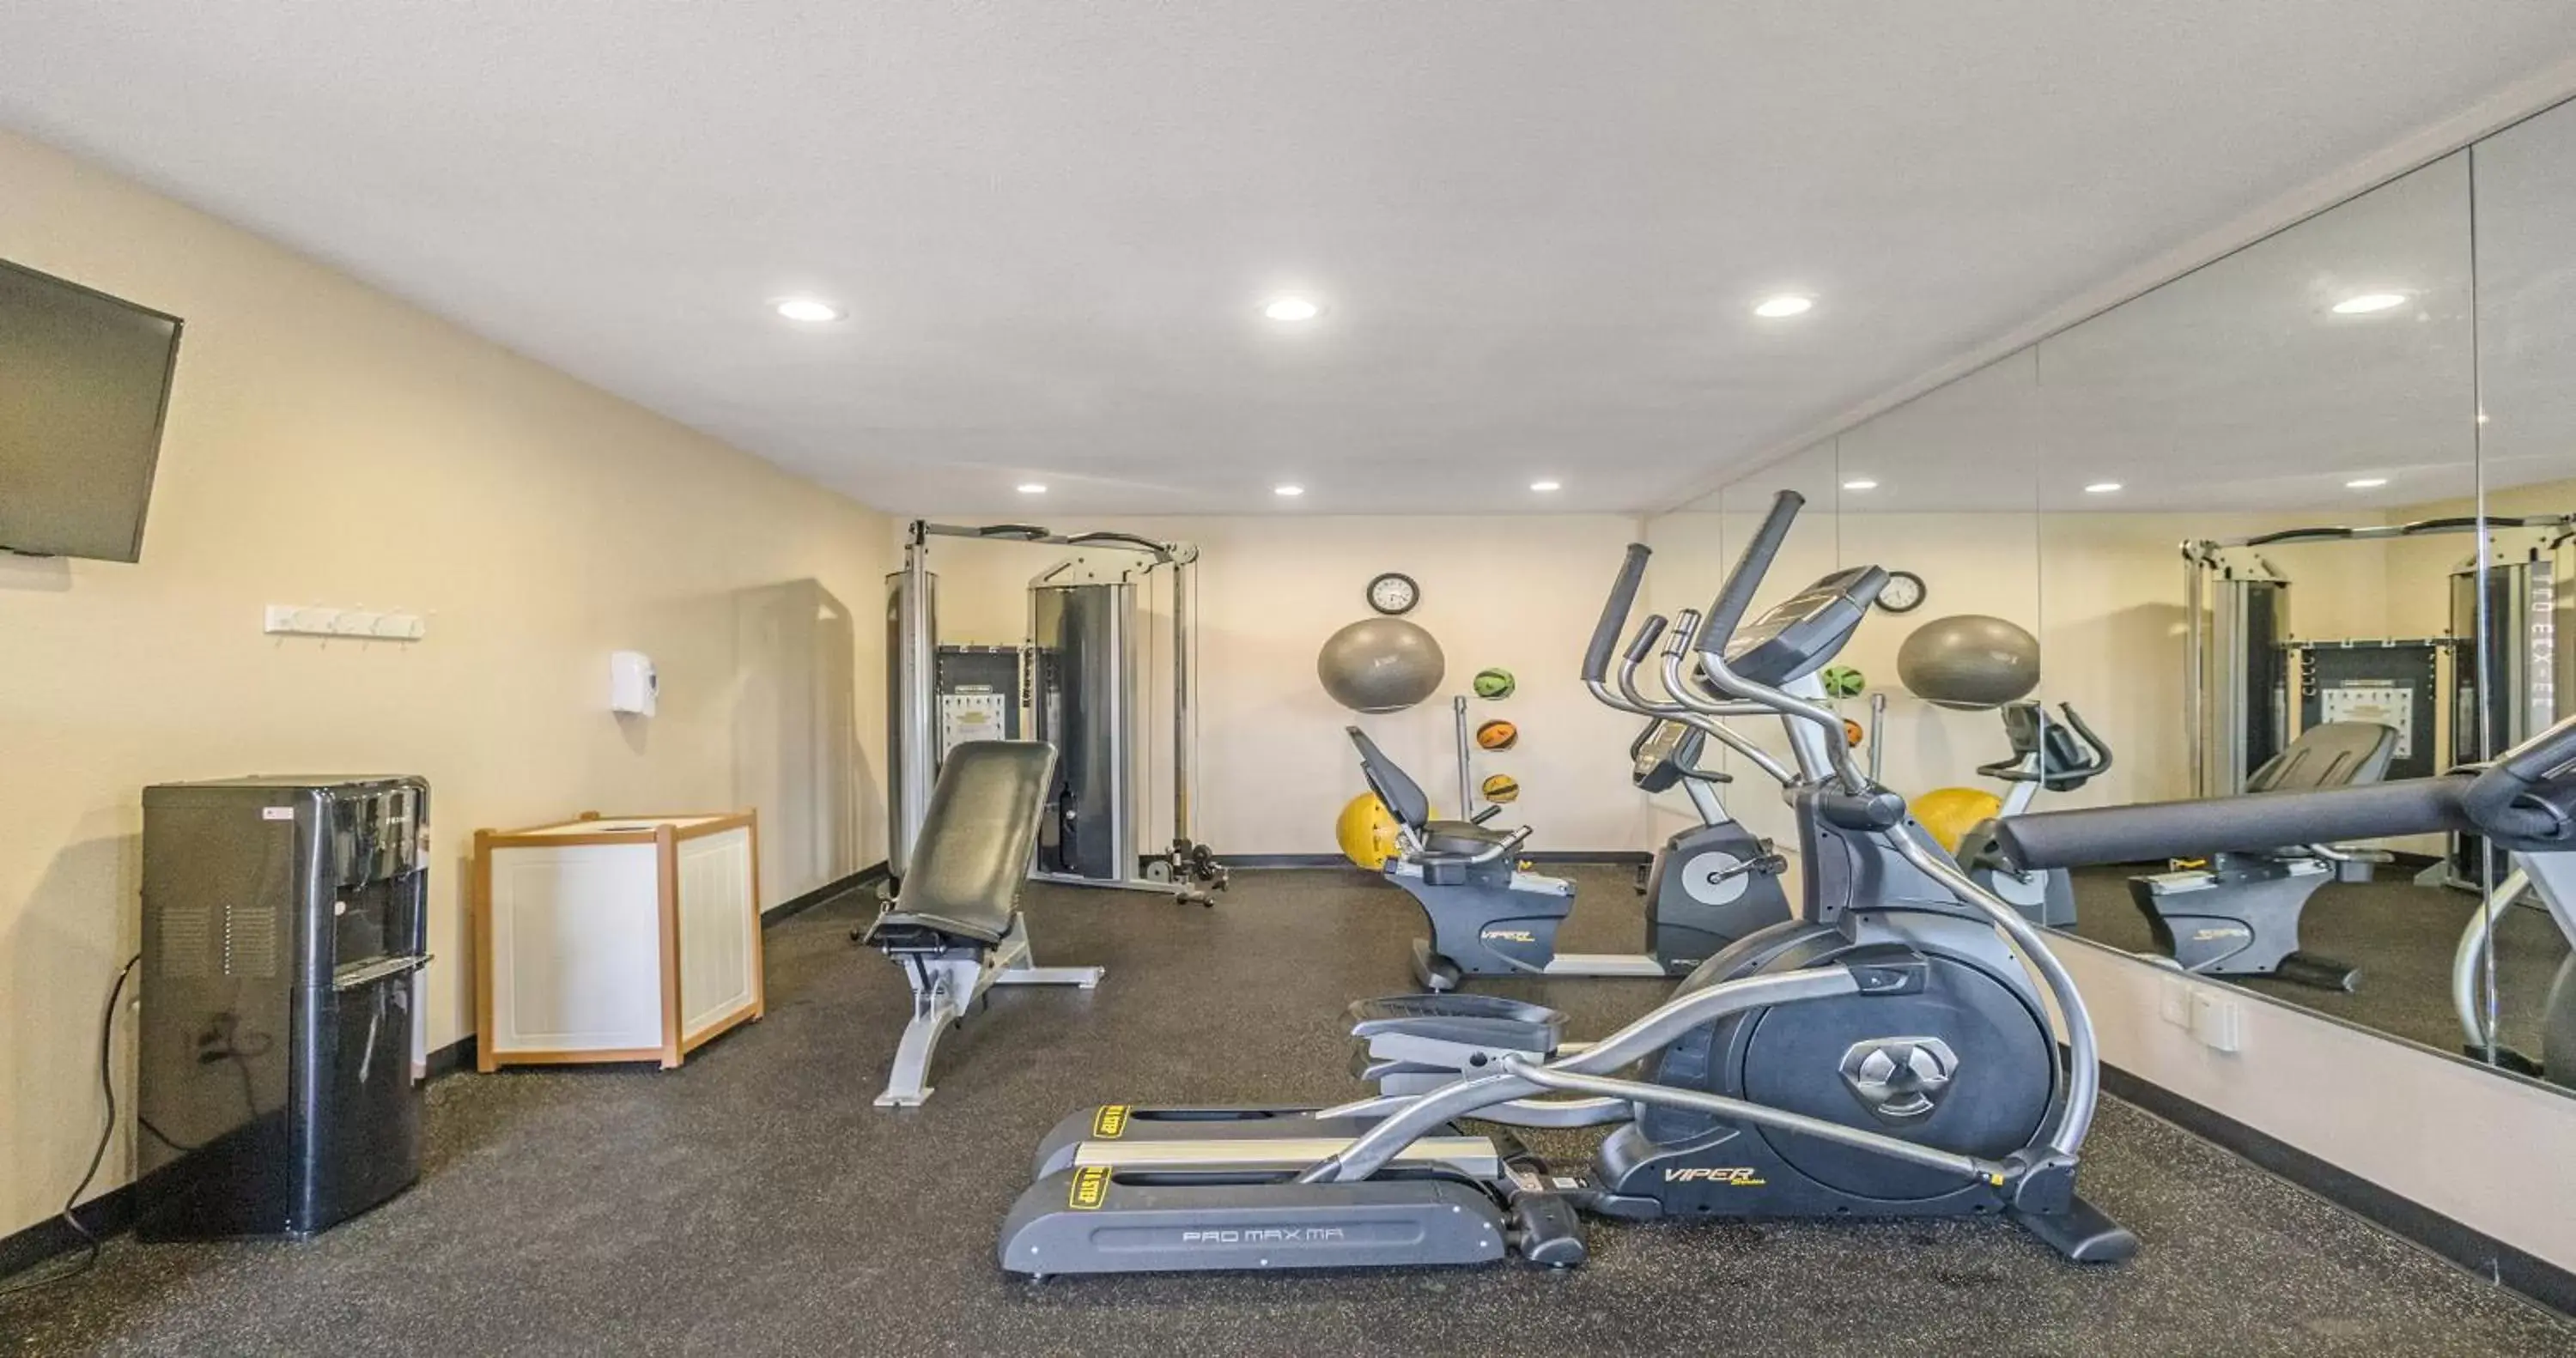 Fitness centre/facilities, Fitness Center/Facilities in Best Western Roseville Inn